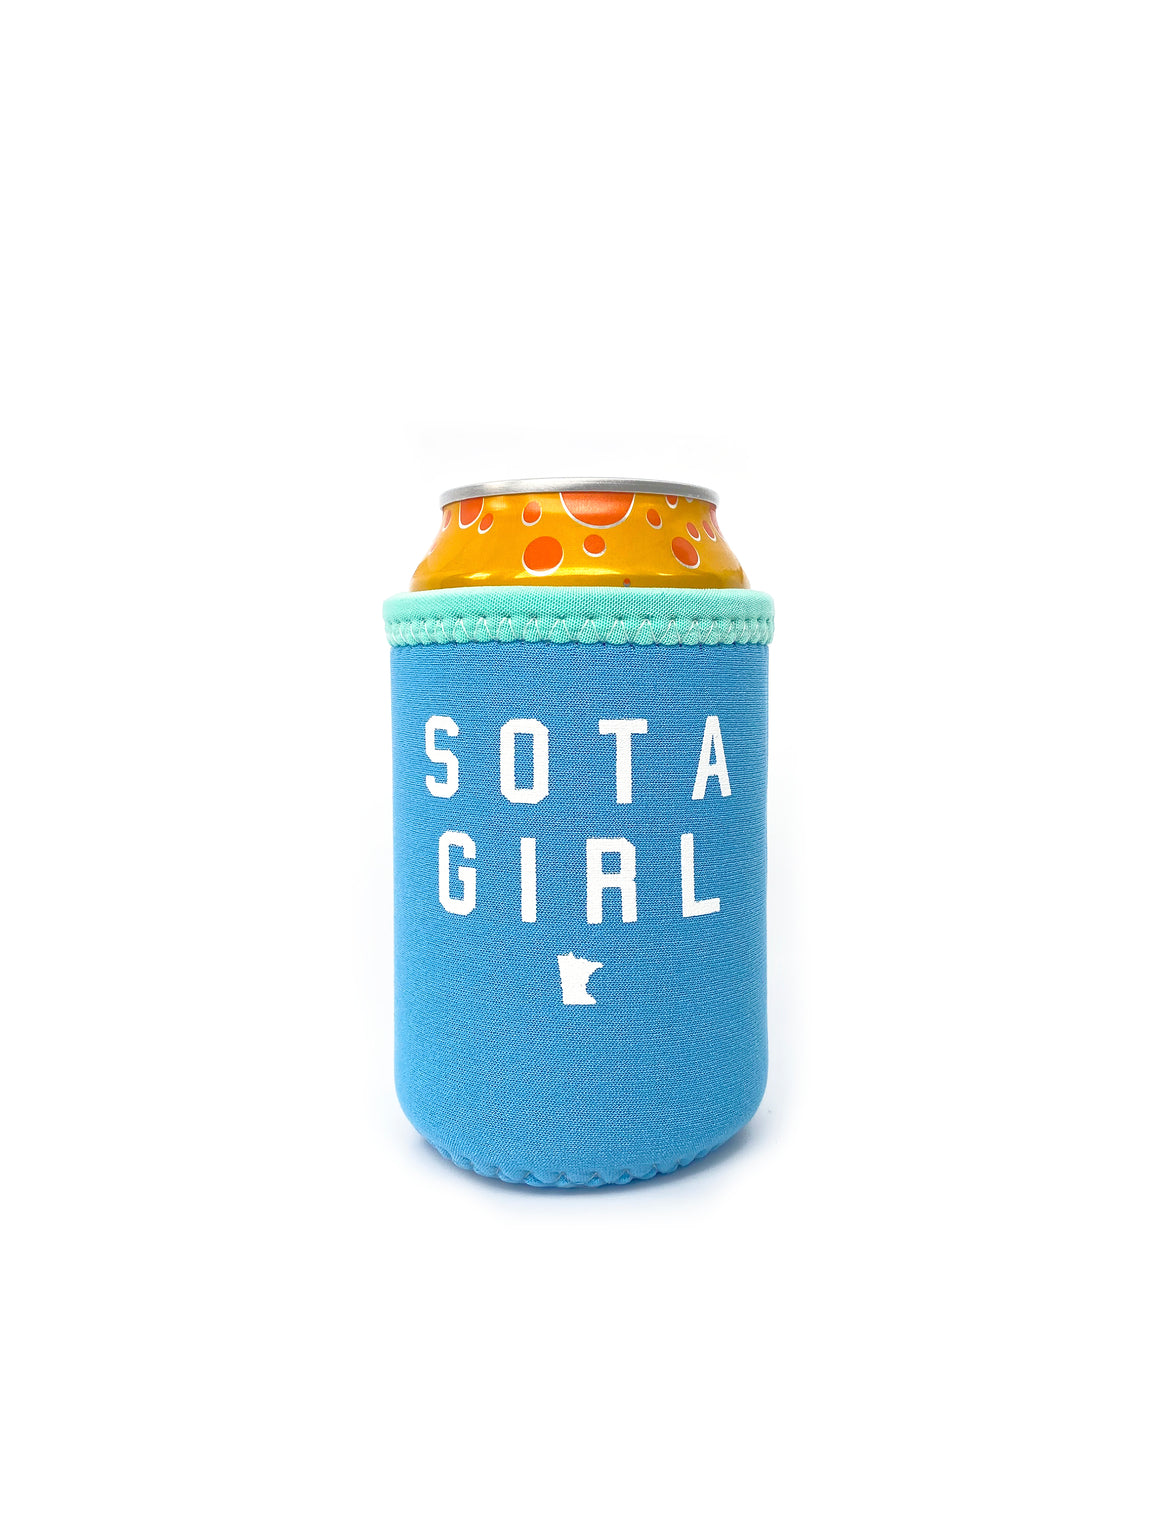 Sota Girl Koozie - Northern Print Co.